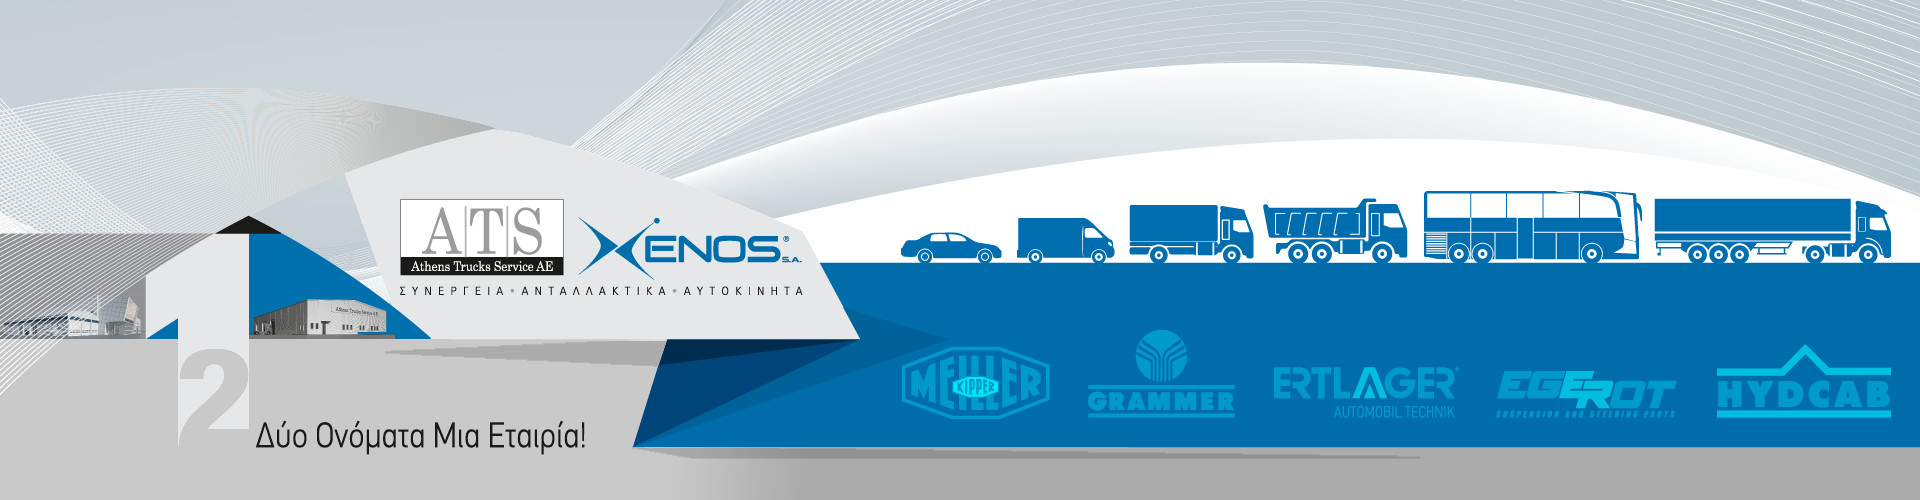 Athens Truck Services SA - Xenos SA - MEILLER KIPPER - GRAMMER - ERTLAGER GmbH - EGEROT